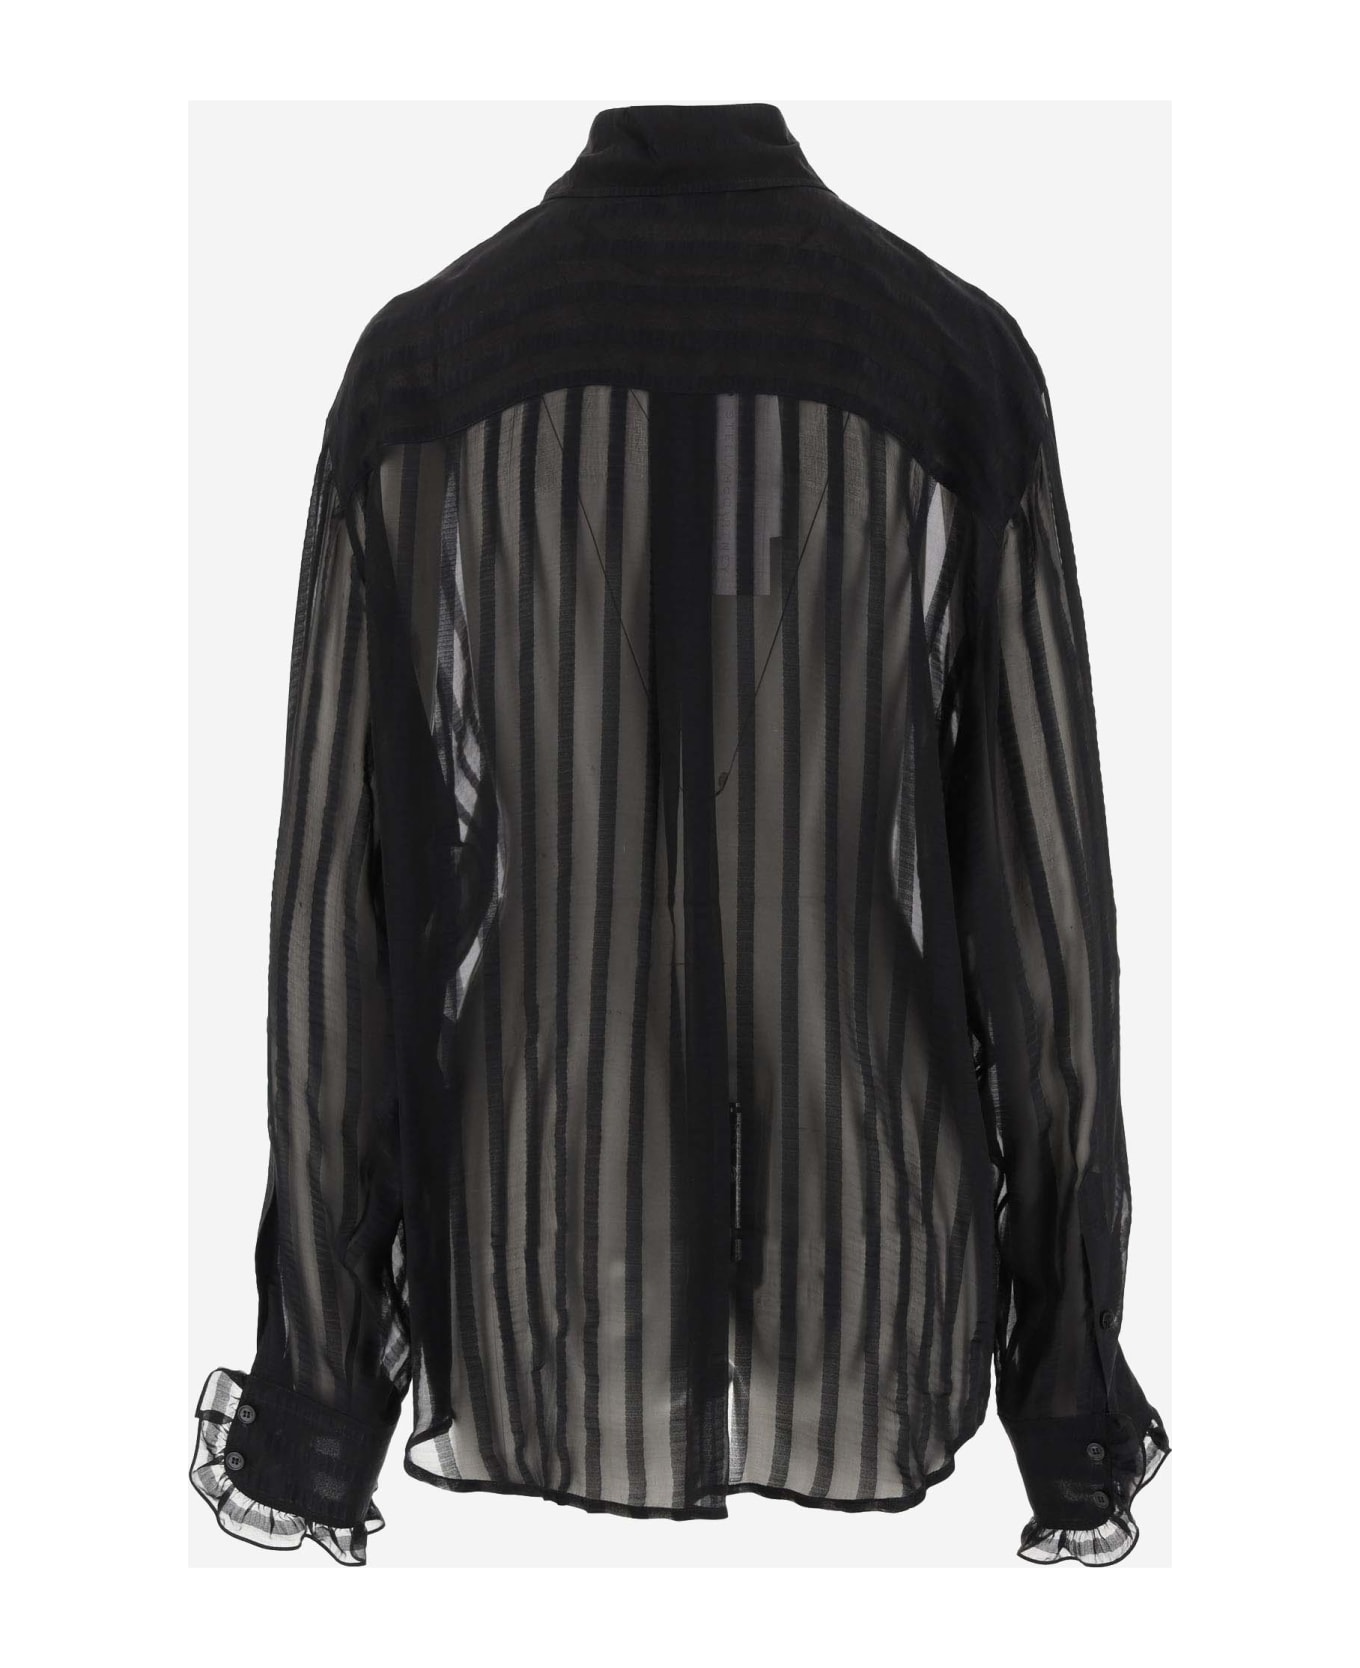 Stella McCartney Silk And Viscose Blend Sheer Shirt - Black